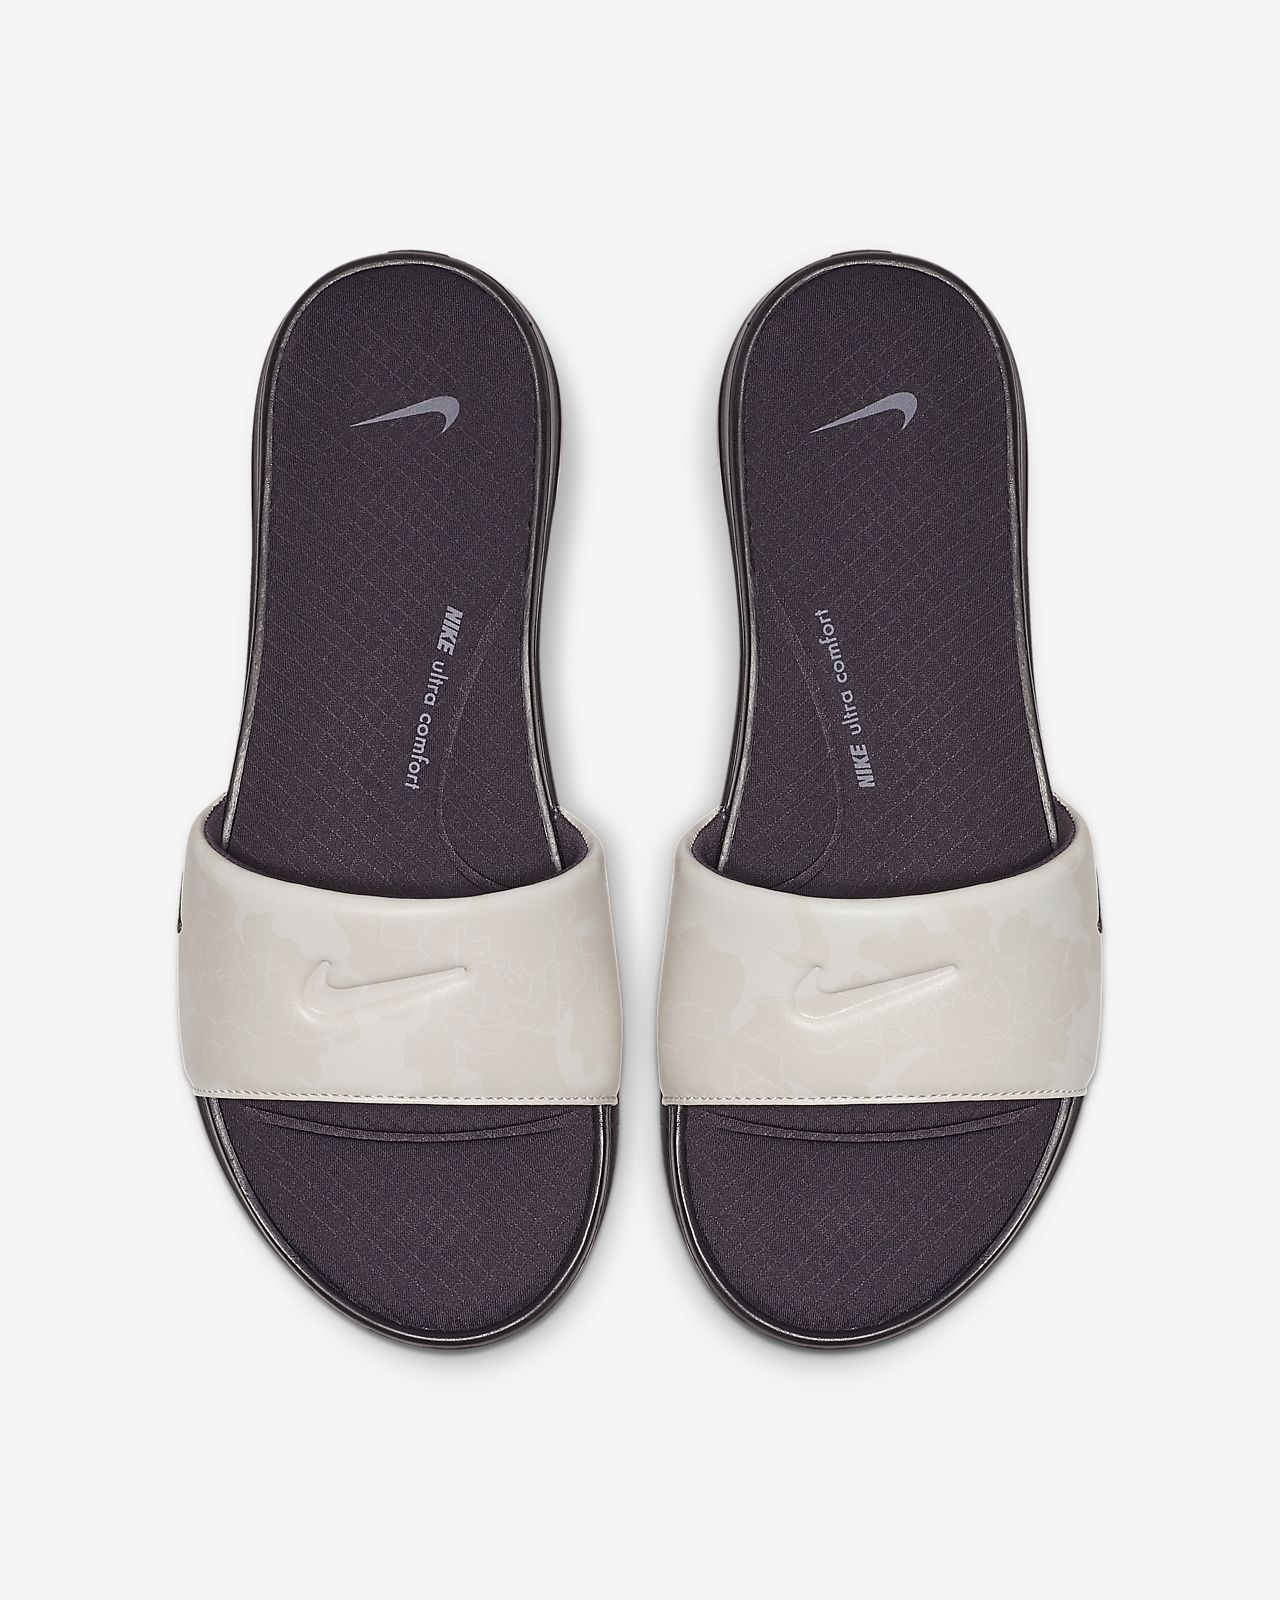 nike ultra comfort women's slide sandals